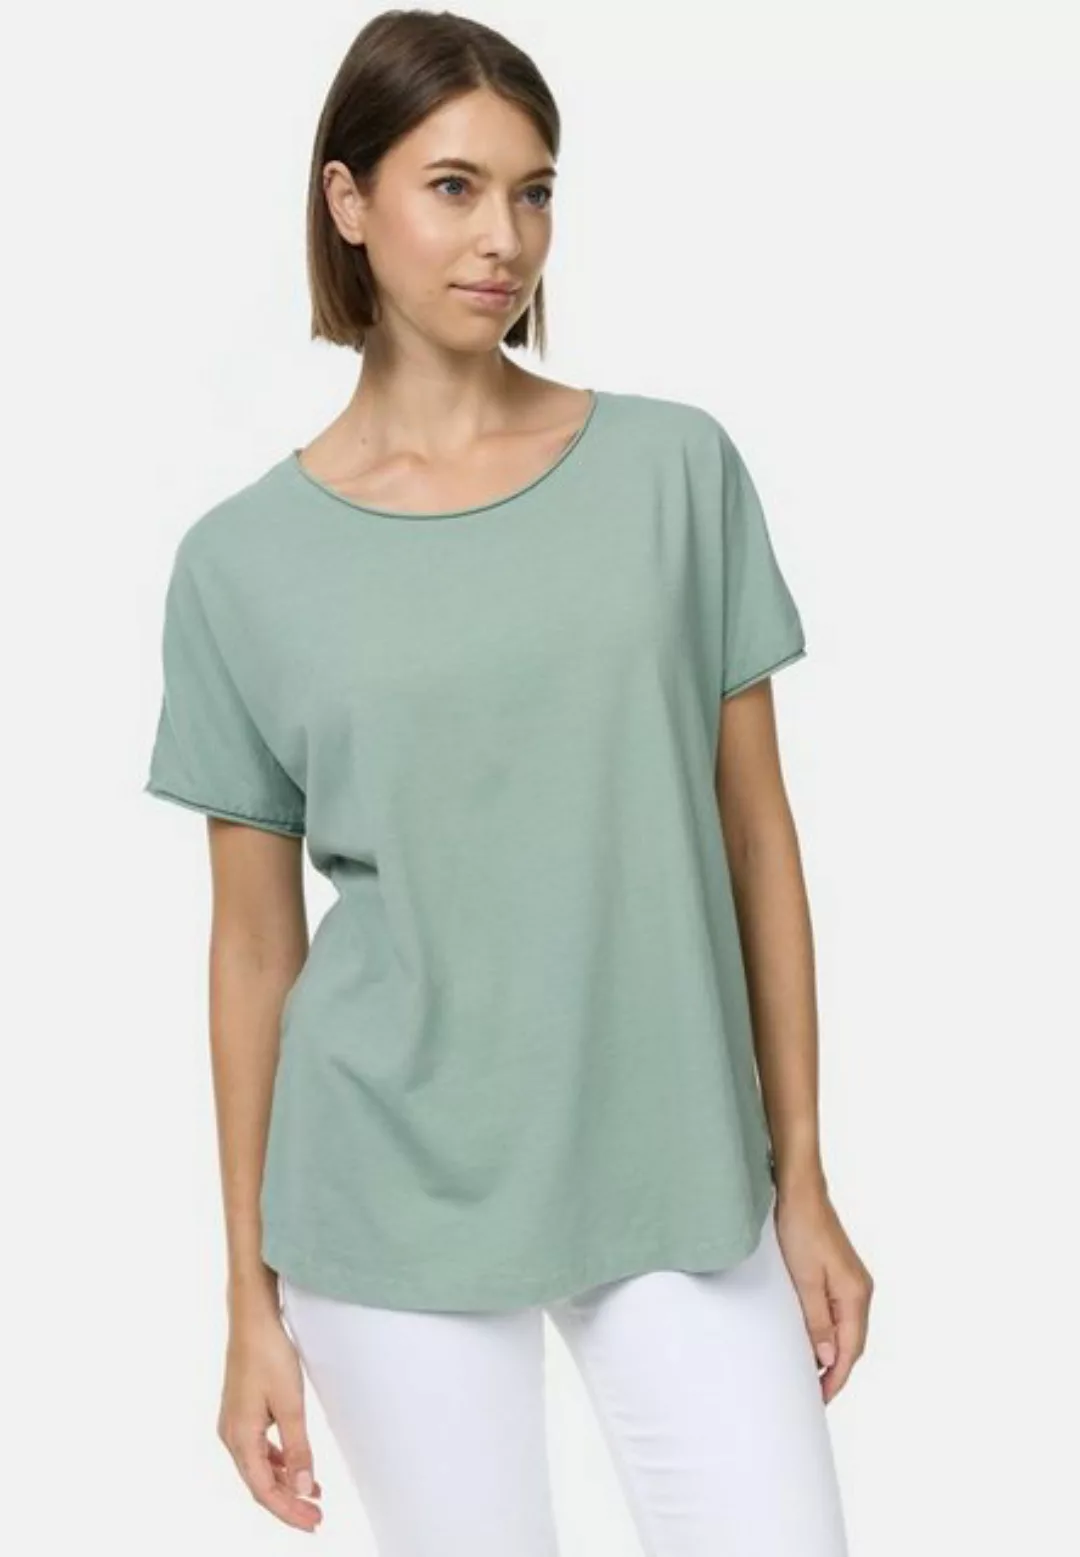 PM SELECTED T-Shirt PM60 (Legere, sportliches T-Shirt in A-Linie) Hautfreun günstig online kaufen